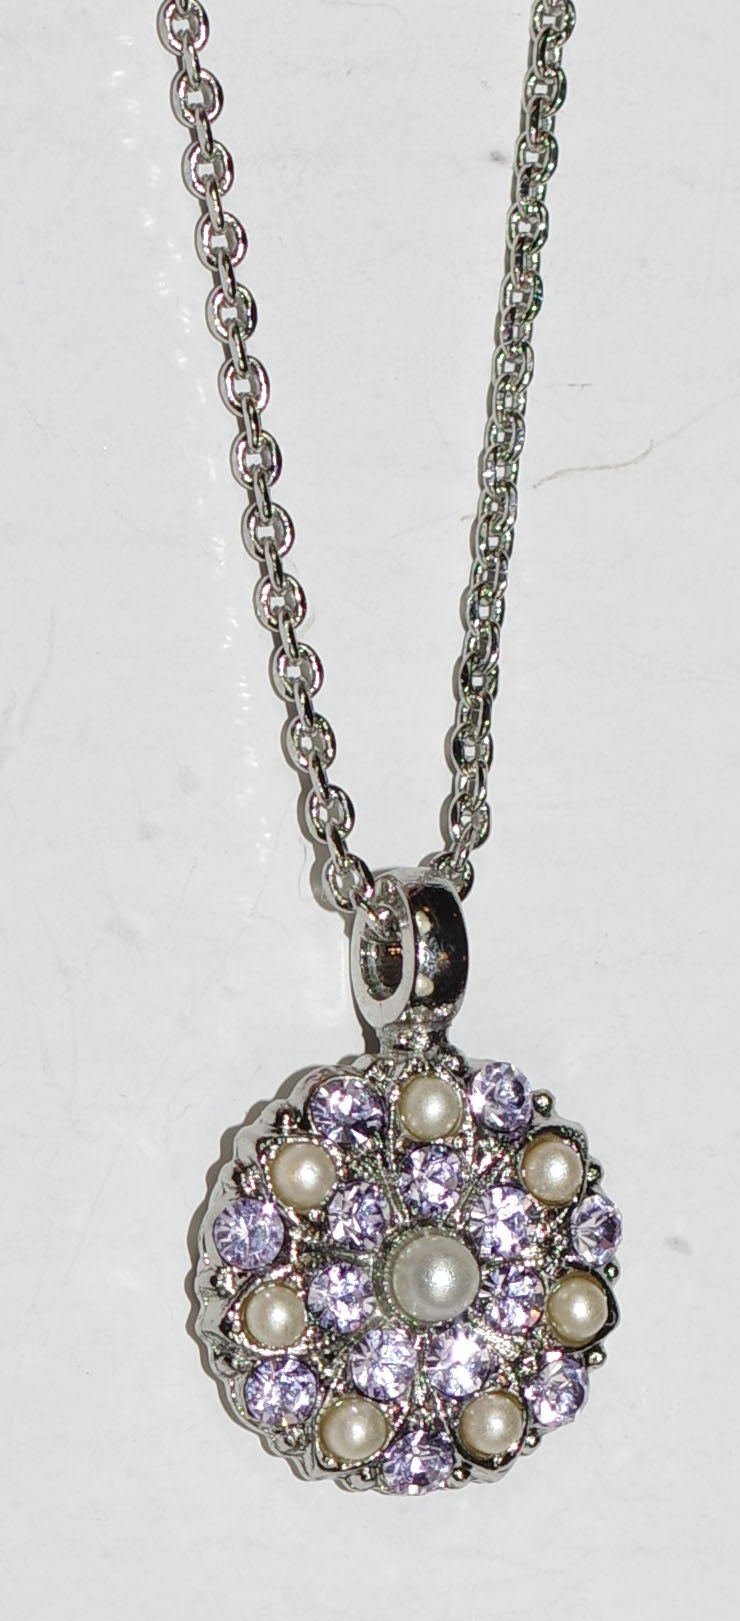 MARIANA ANGEL PENDANT ROMANCE: purple, pearl stones in silver rhodium setting, 18" adjustable chain